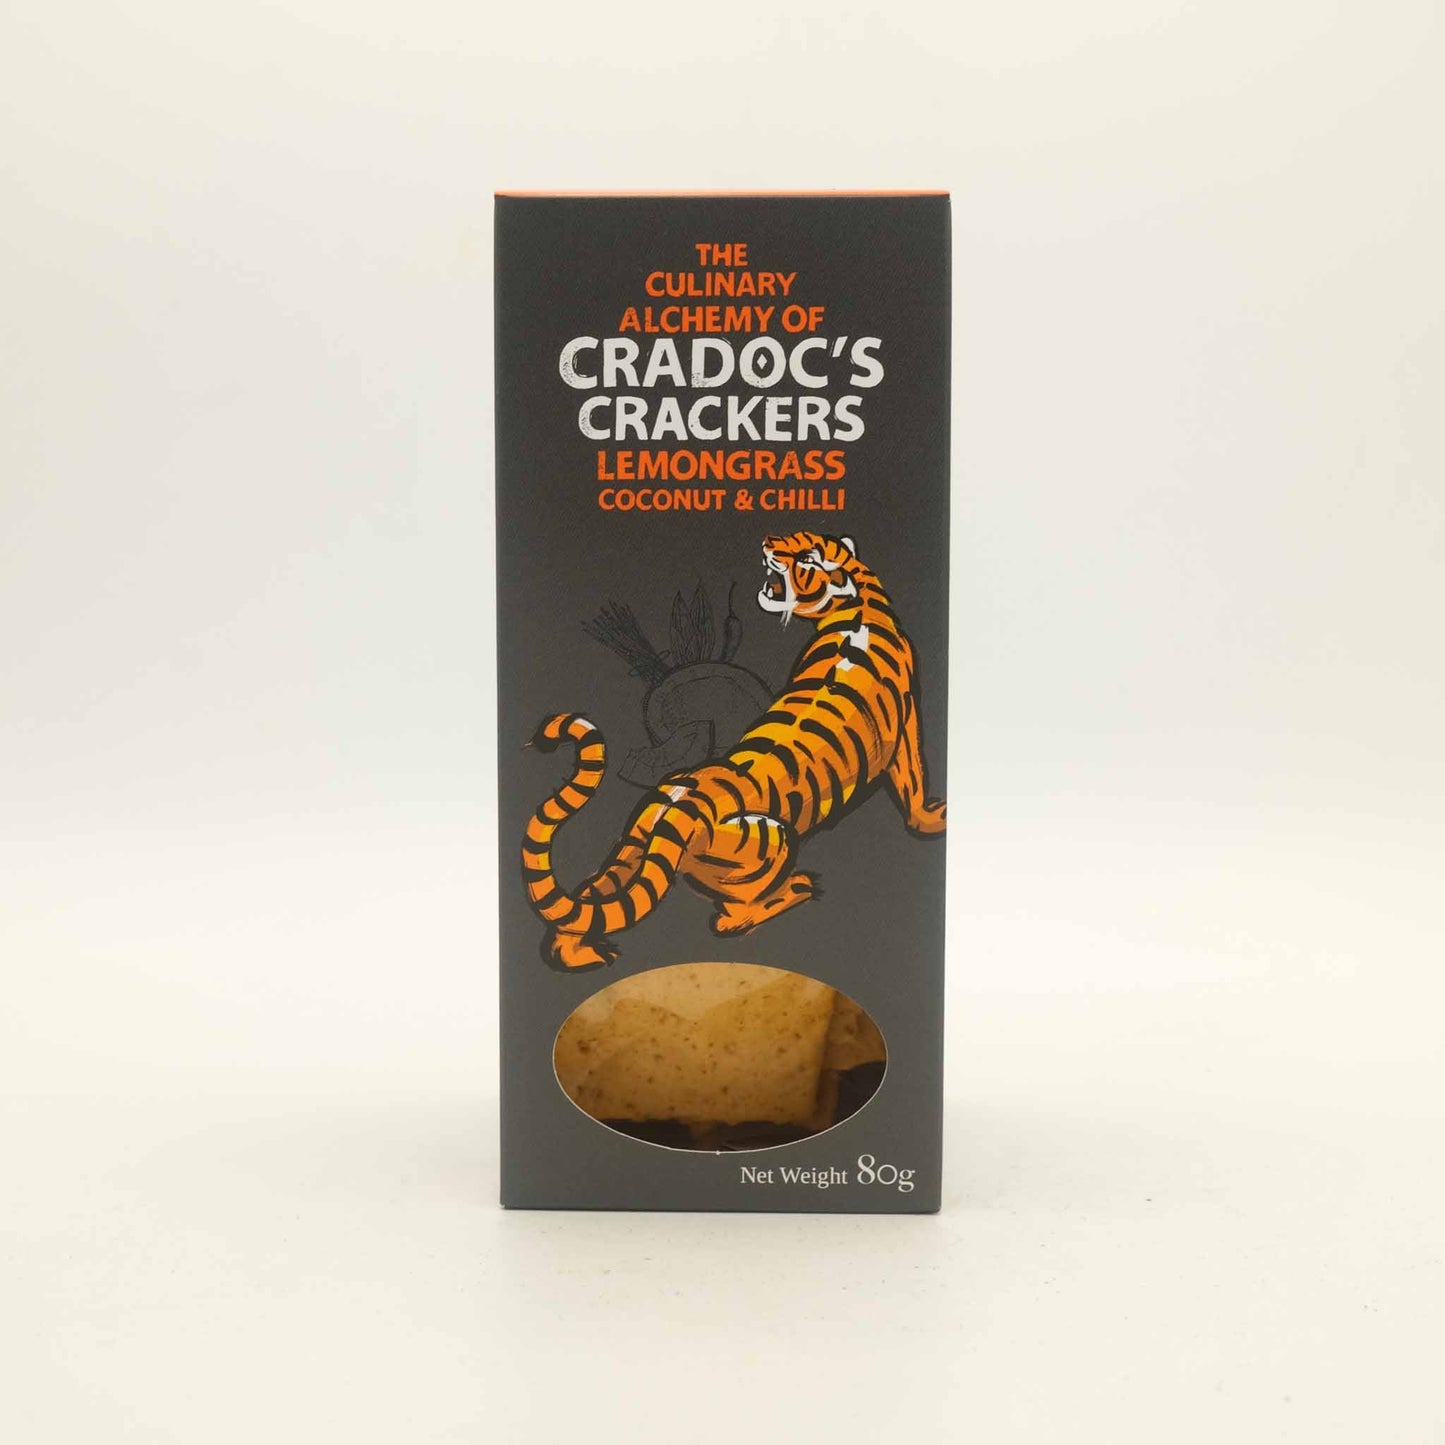 Cradoc's Lemongrass, Coconut & Chilli Crackers